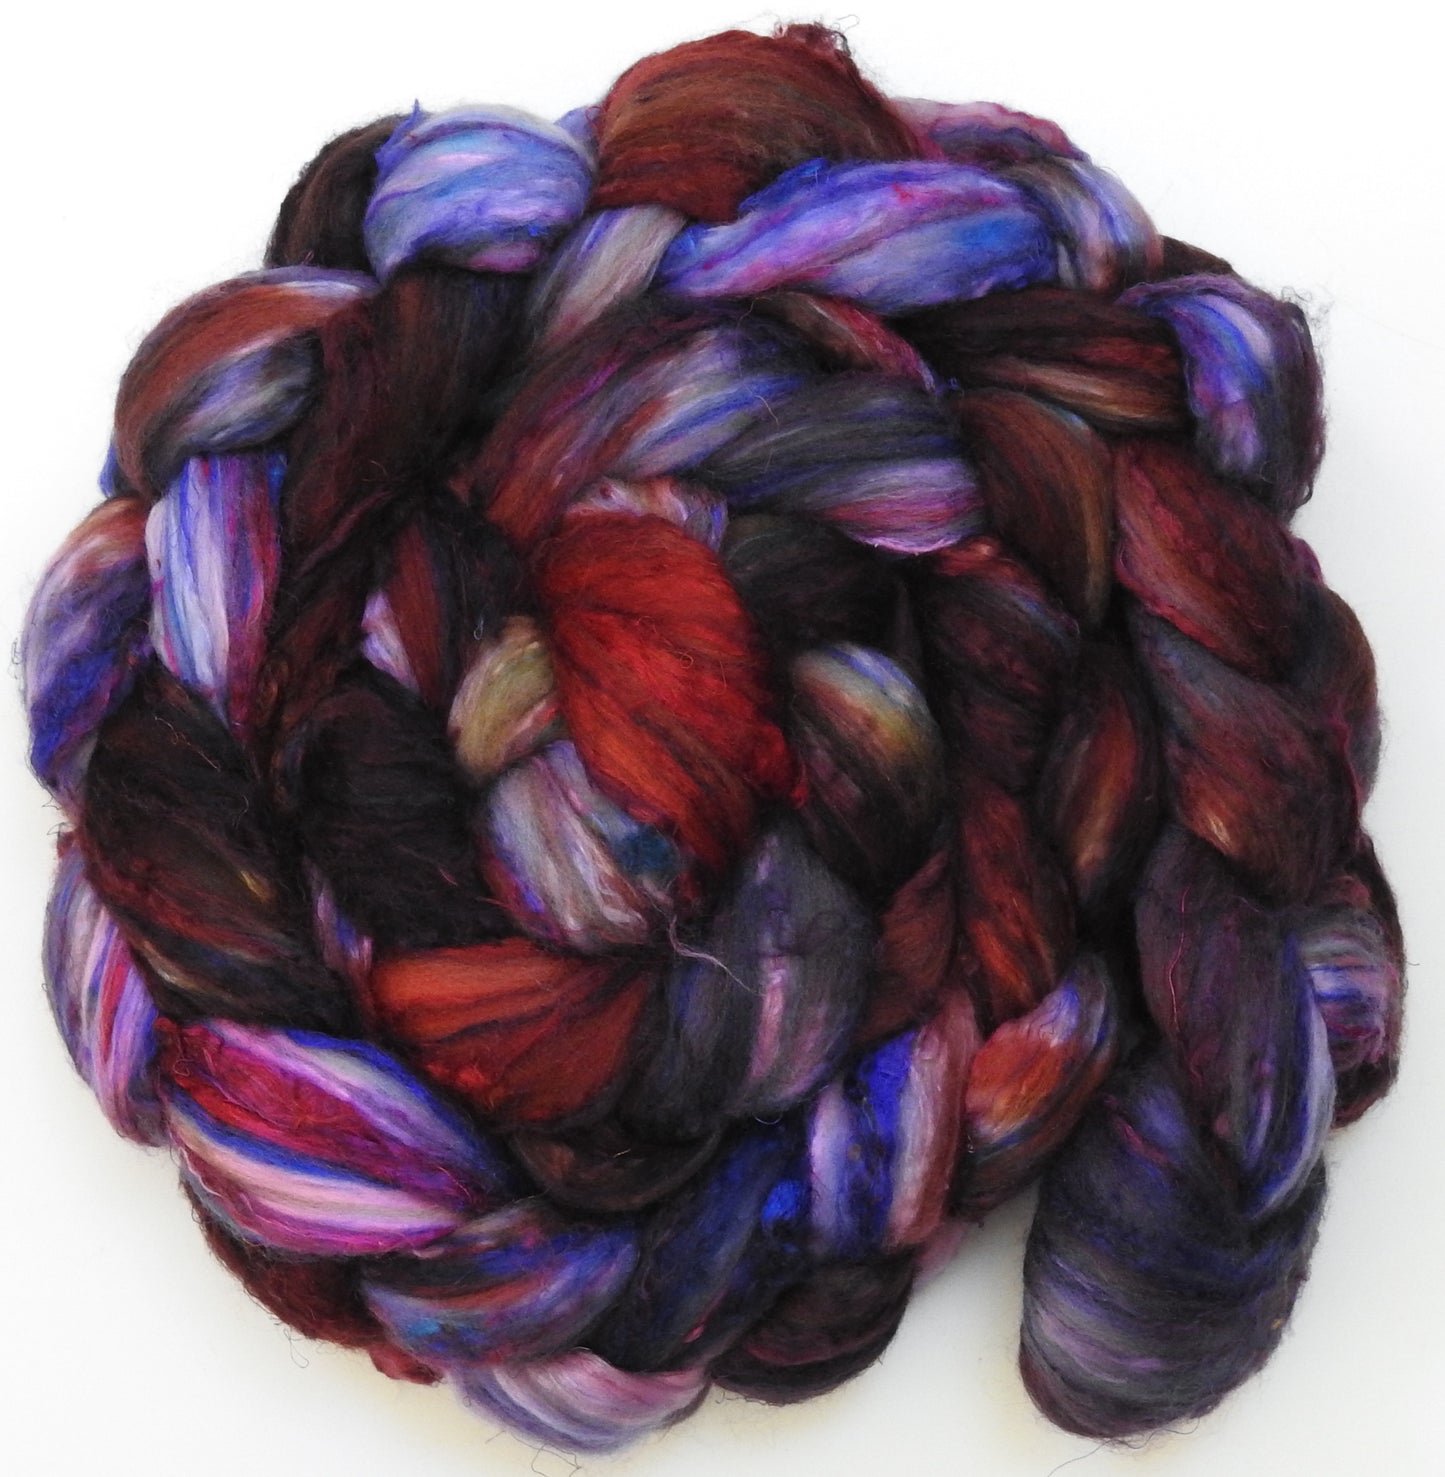 Batt in a Braid #39 - Singular 38 -(5.6 oz.)  Merino/ Mulberry Silk / Sari Silk (50/25/25)